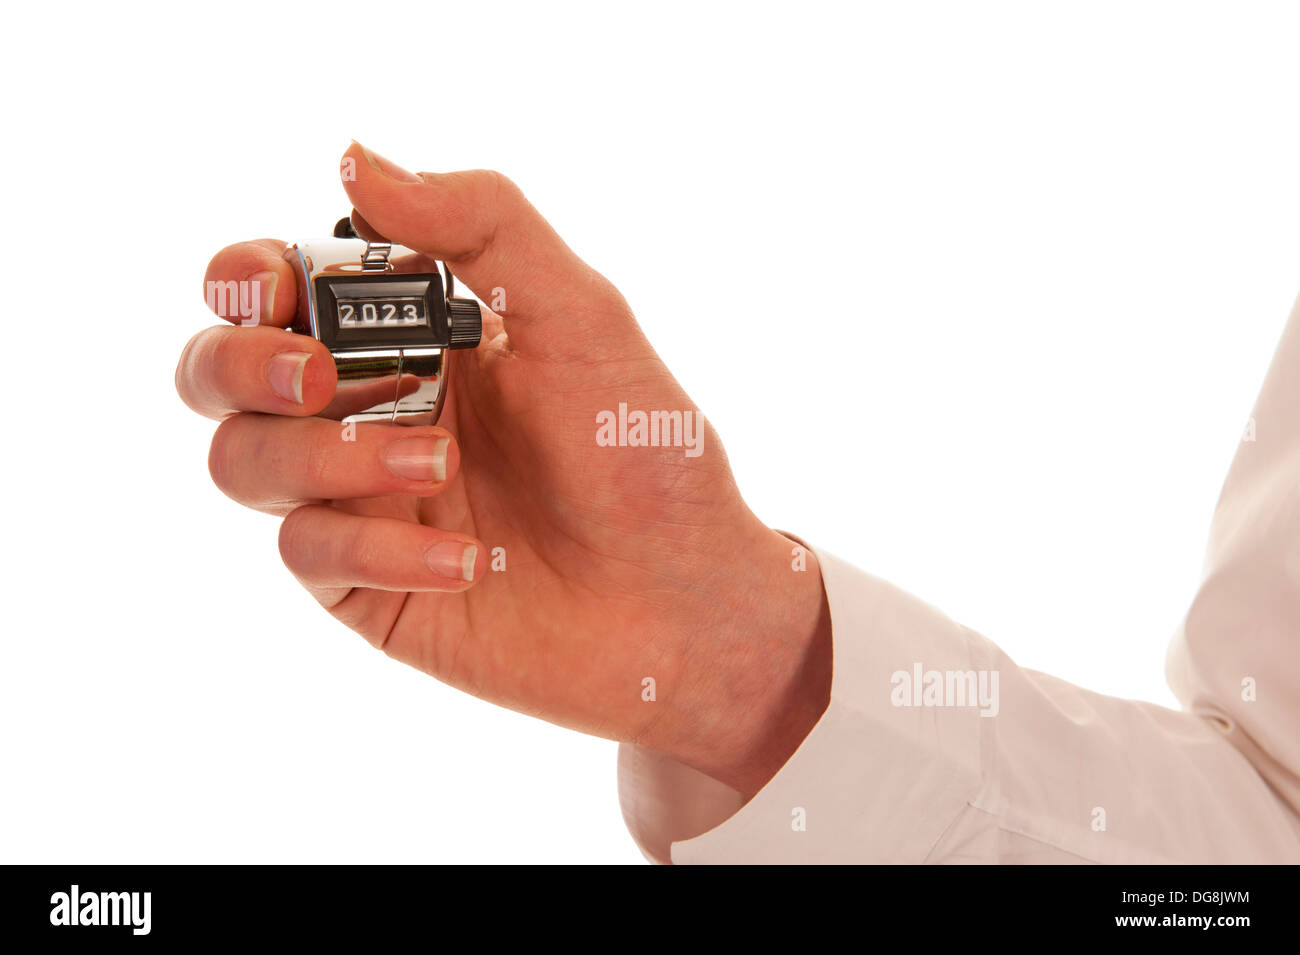 Mano sujetando un podómetro plata pulsando su botón aislado en fondo blanco. Foto de stock